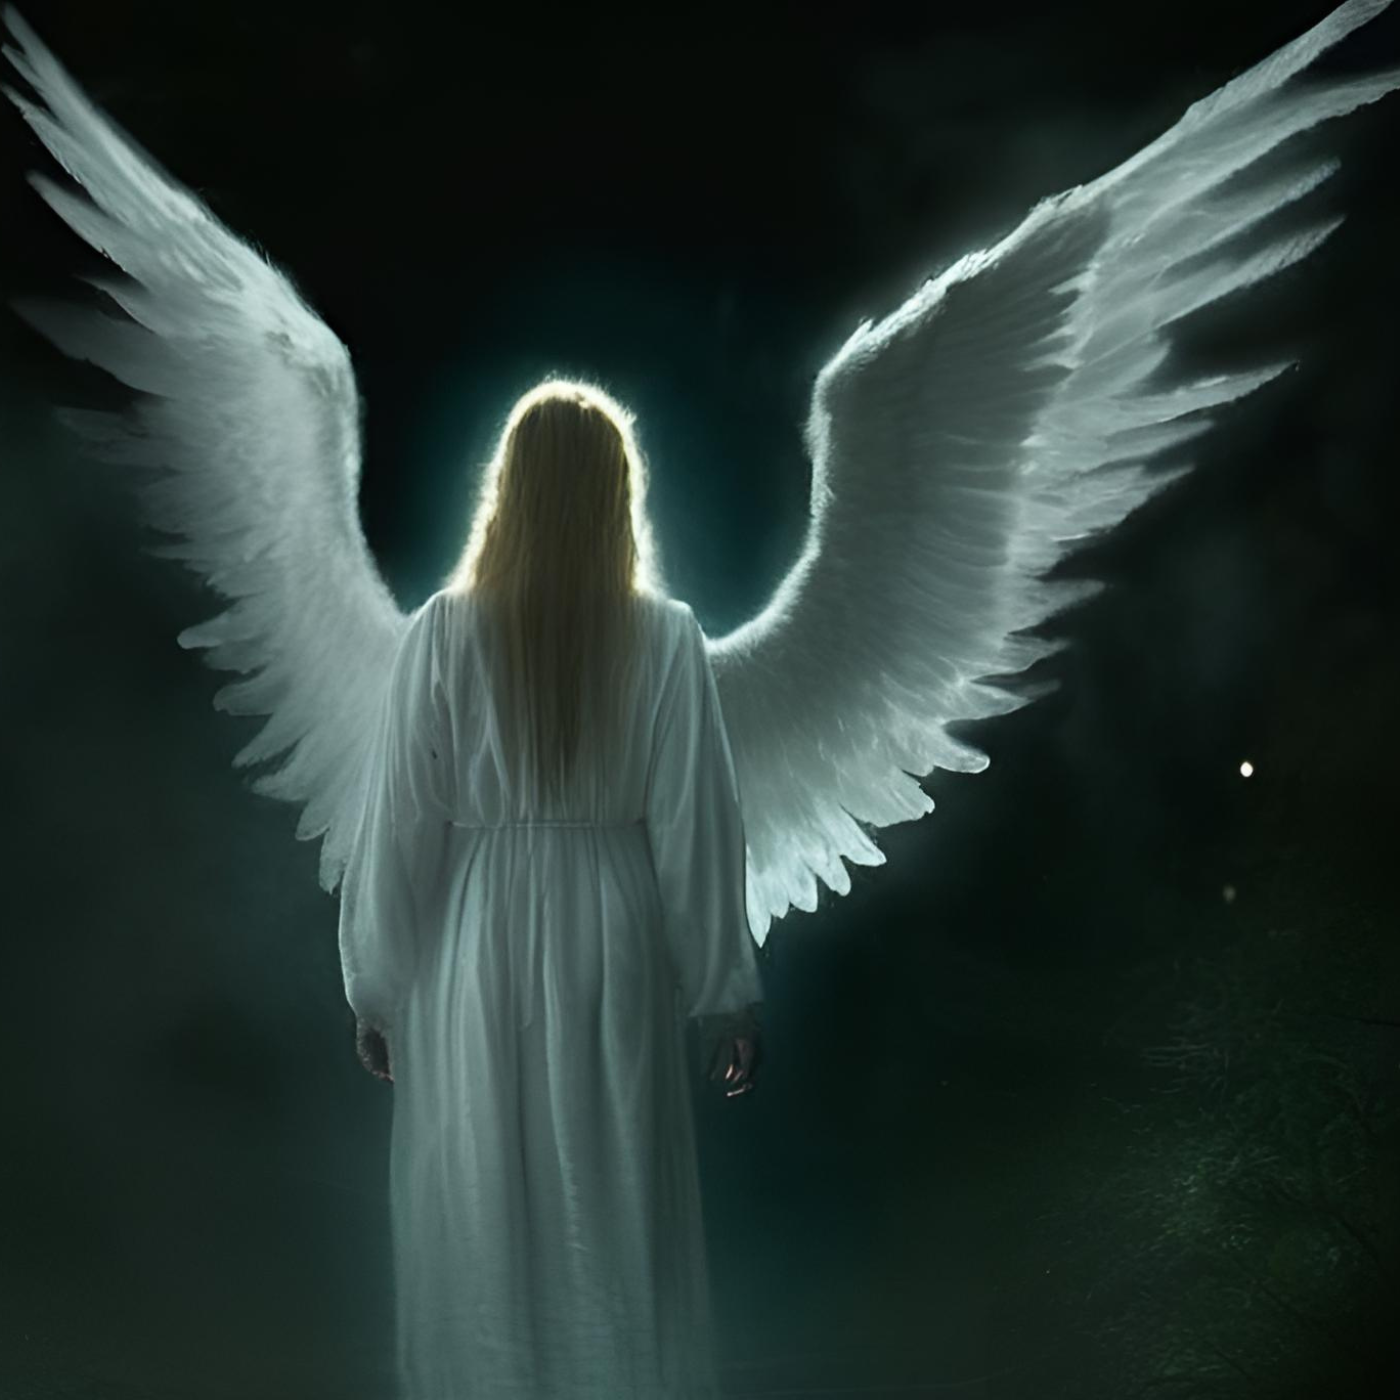 Ep. #694: O HEAR THE ANGEL VOICES w/ Dr. Scott Guerin & Nichole Bigley